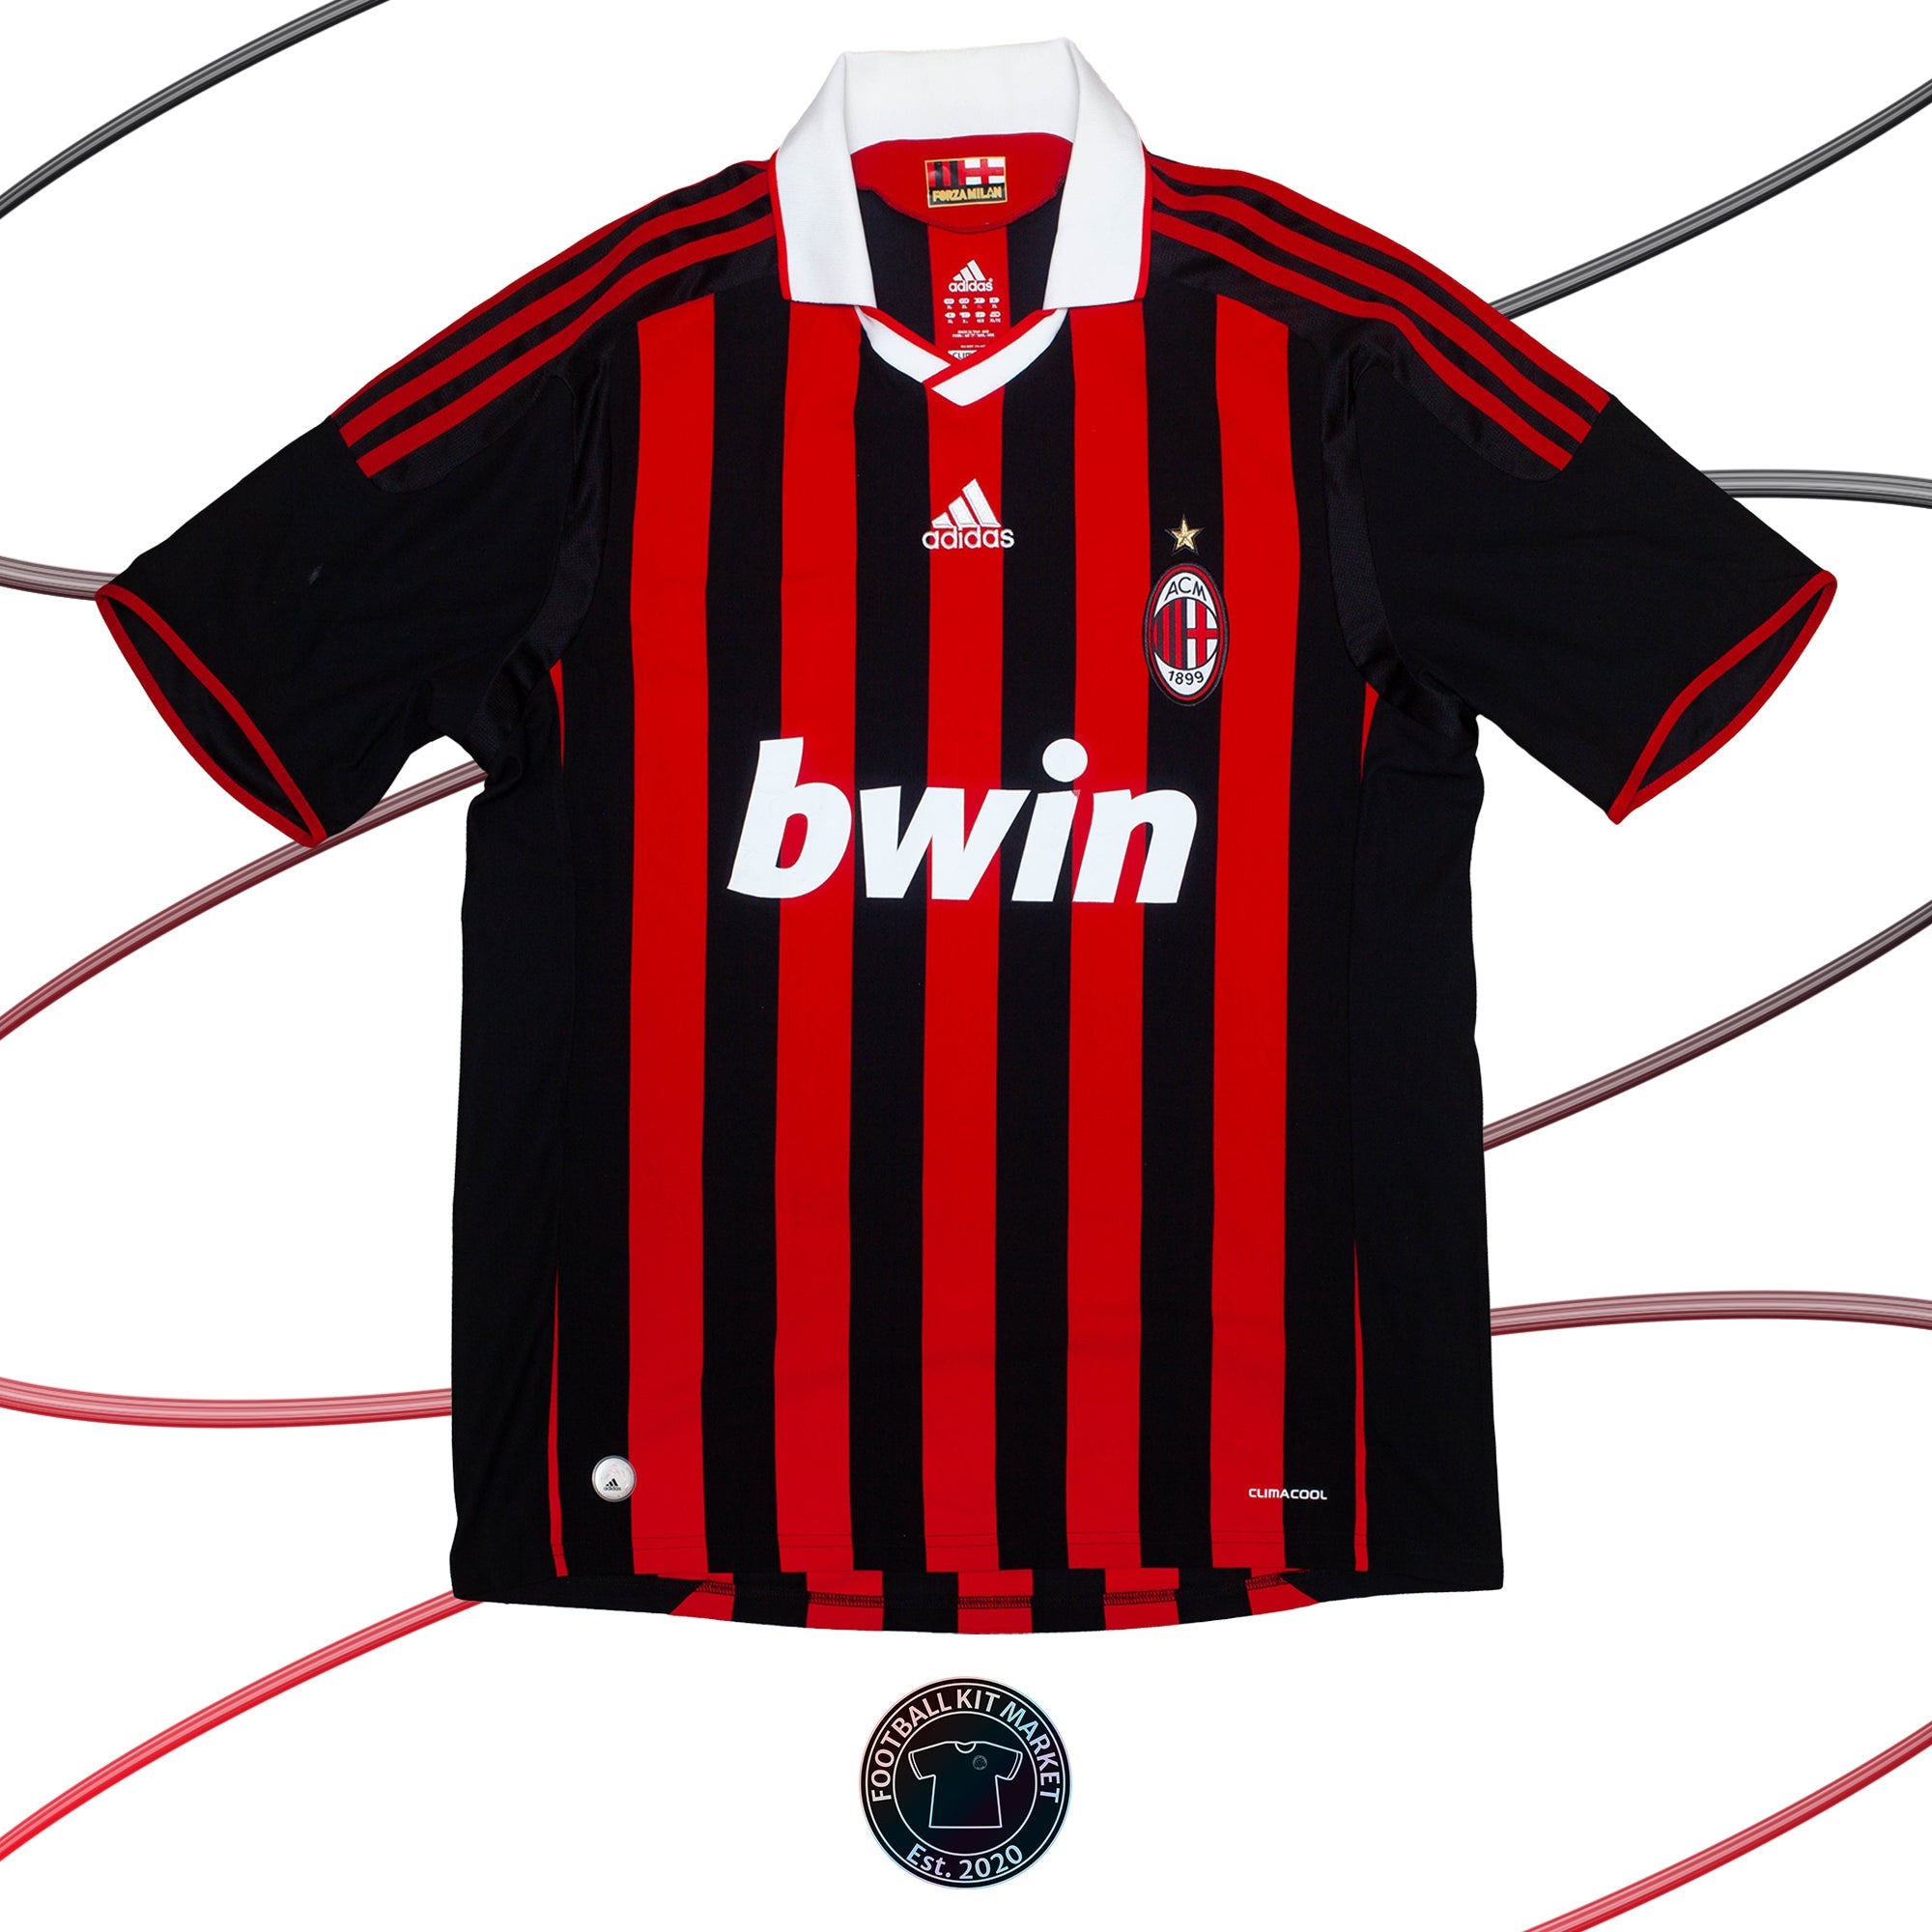 Genuine AC MILAN Home Shirt (2009-2010) - ADIDAS (XL) - Product Image from Football Kit Market